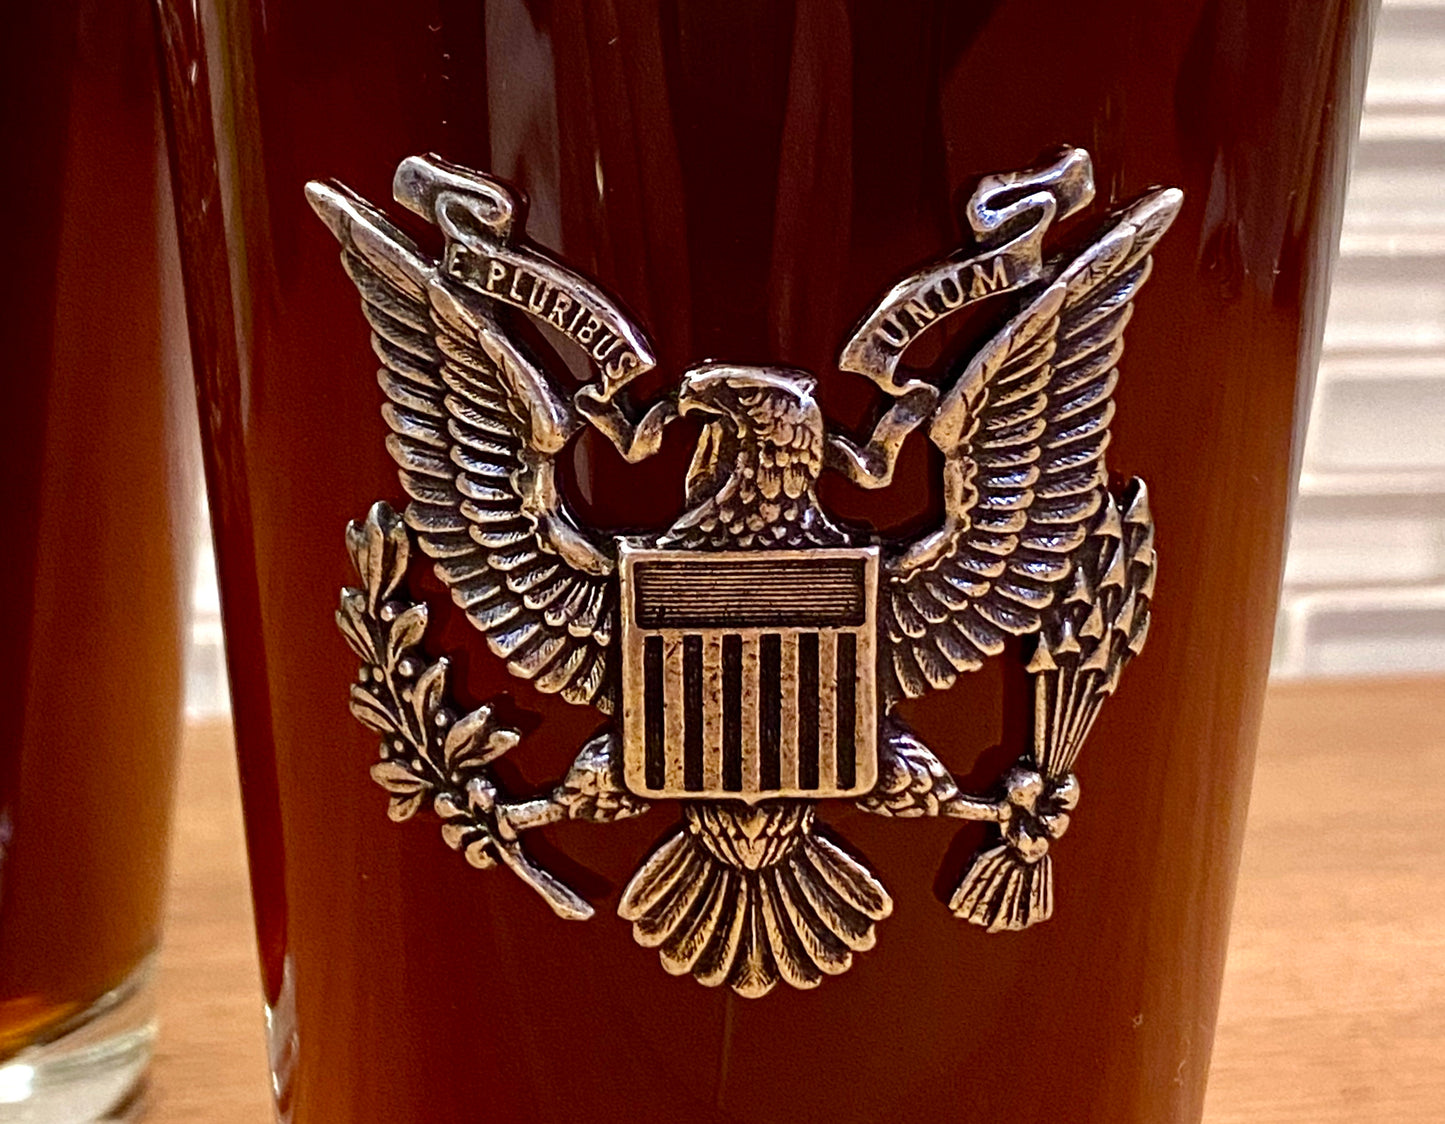 Custom Set of Beer Glasses, American Eagle, Military Emblem, Air Force, Army, Navy, Marines, American Pint Beer Glasses BW-004